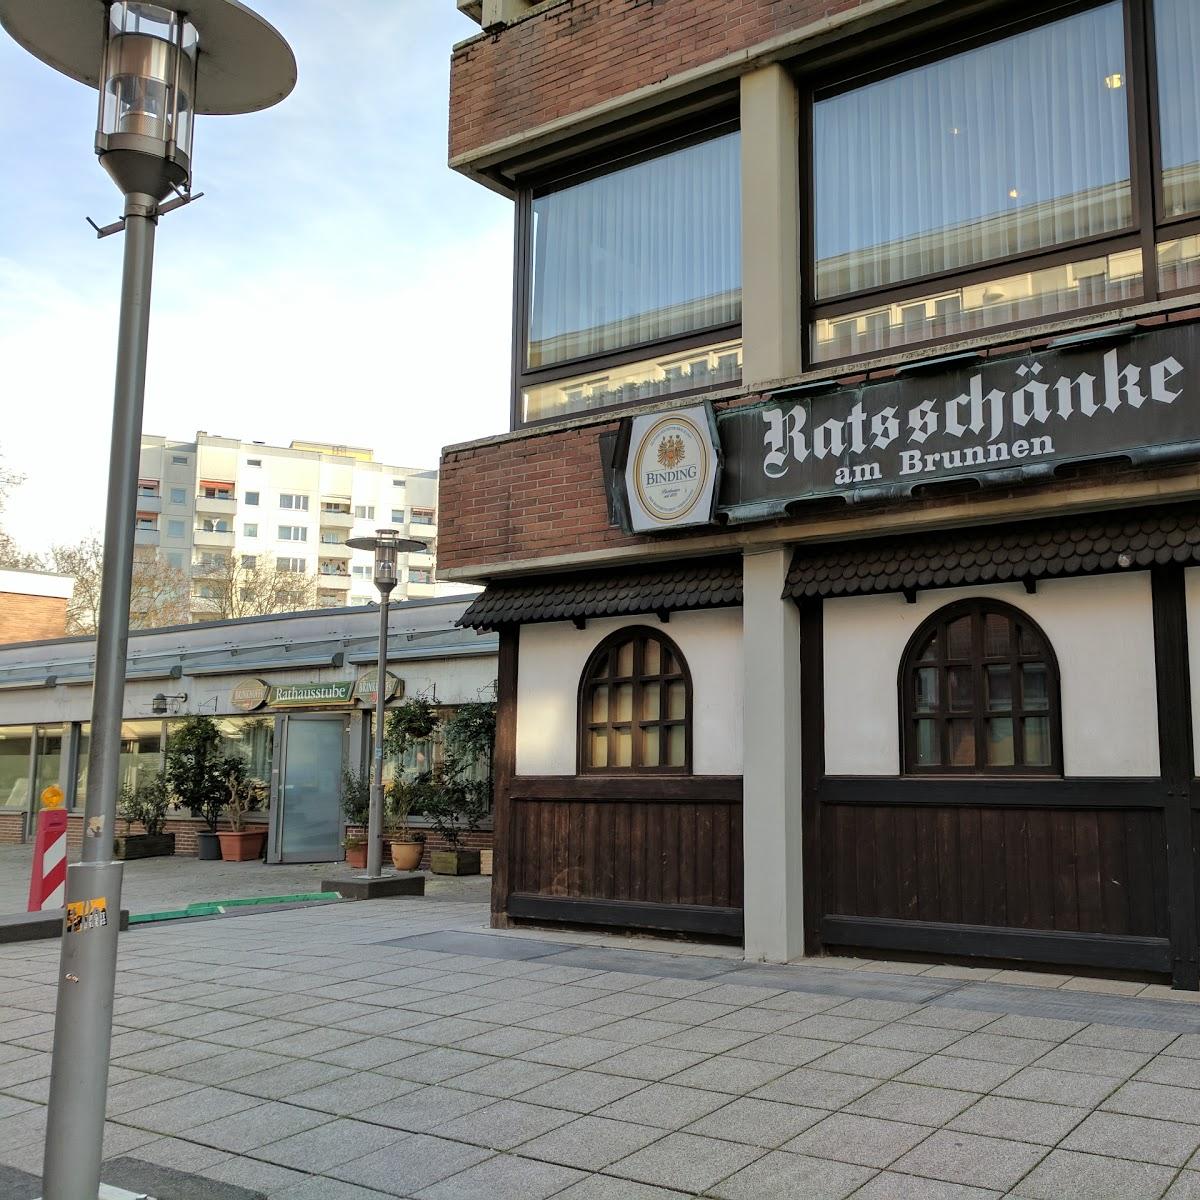 Restaurant "Rathausstube" in Eschborn